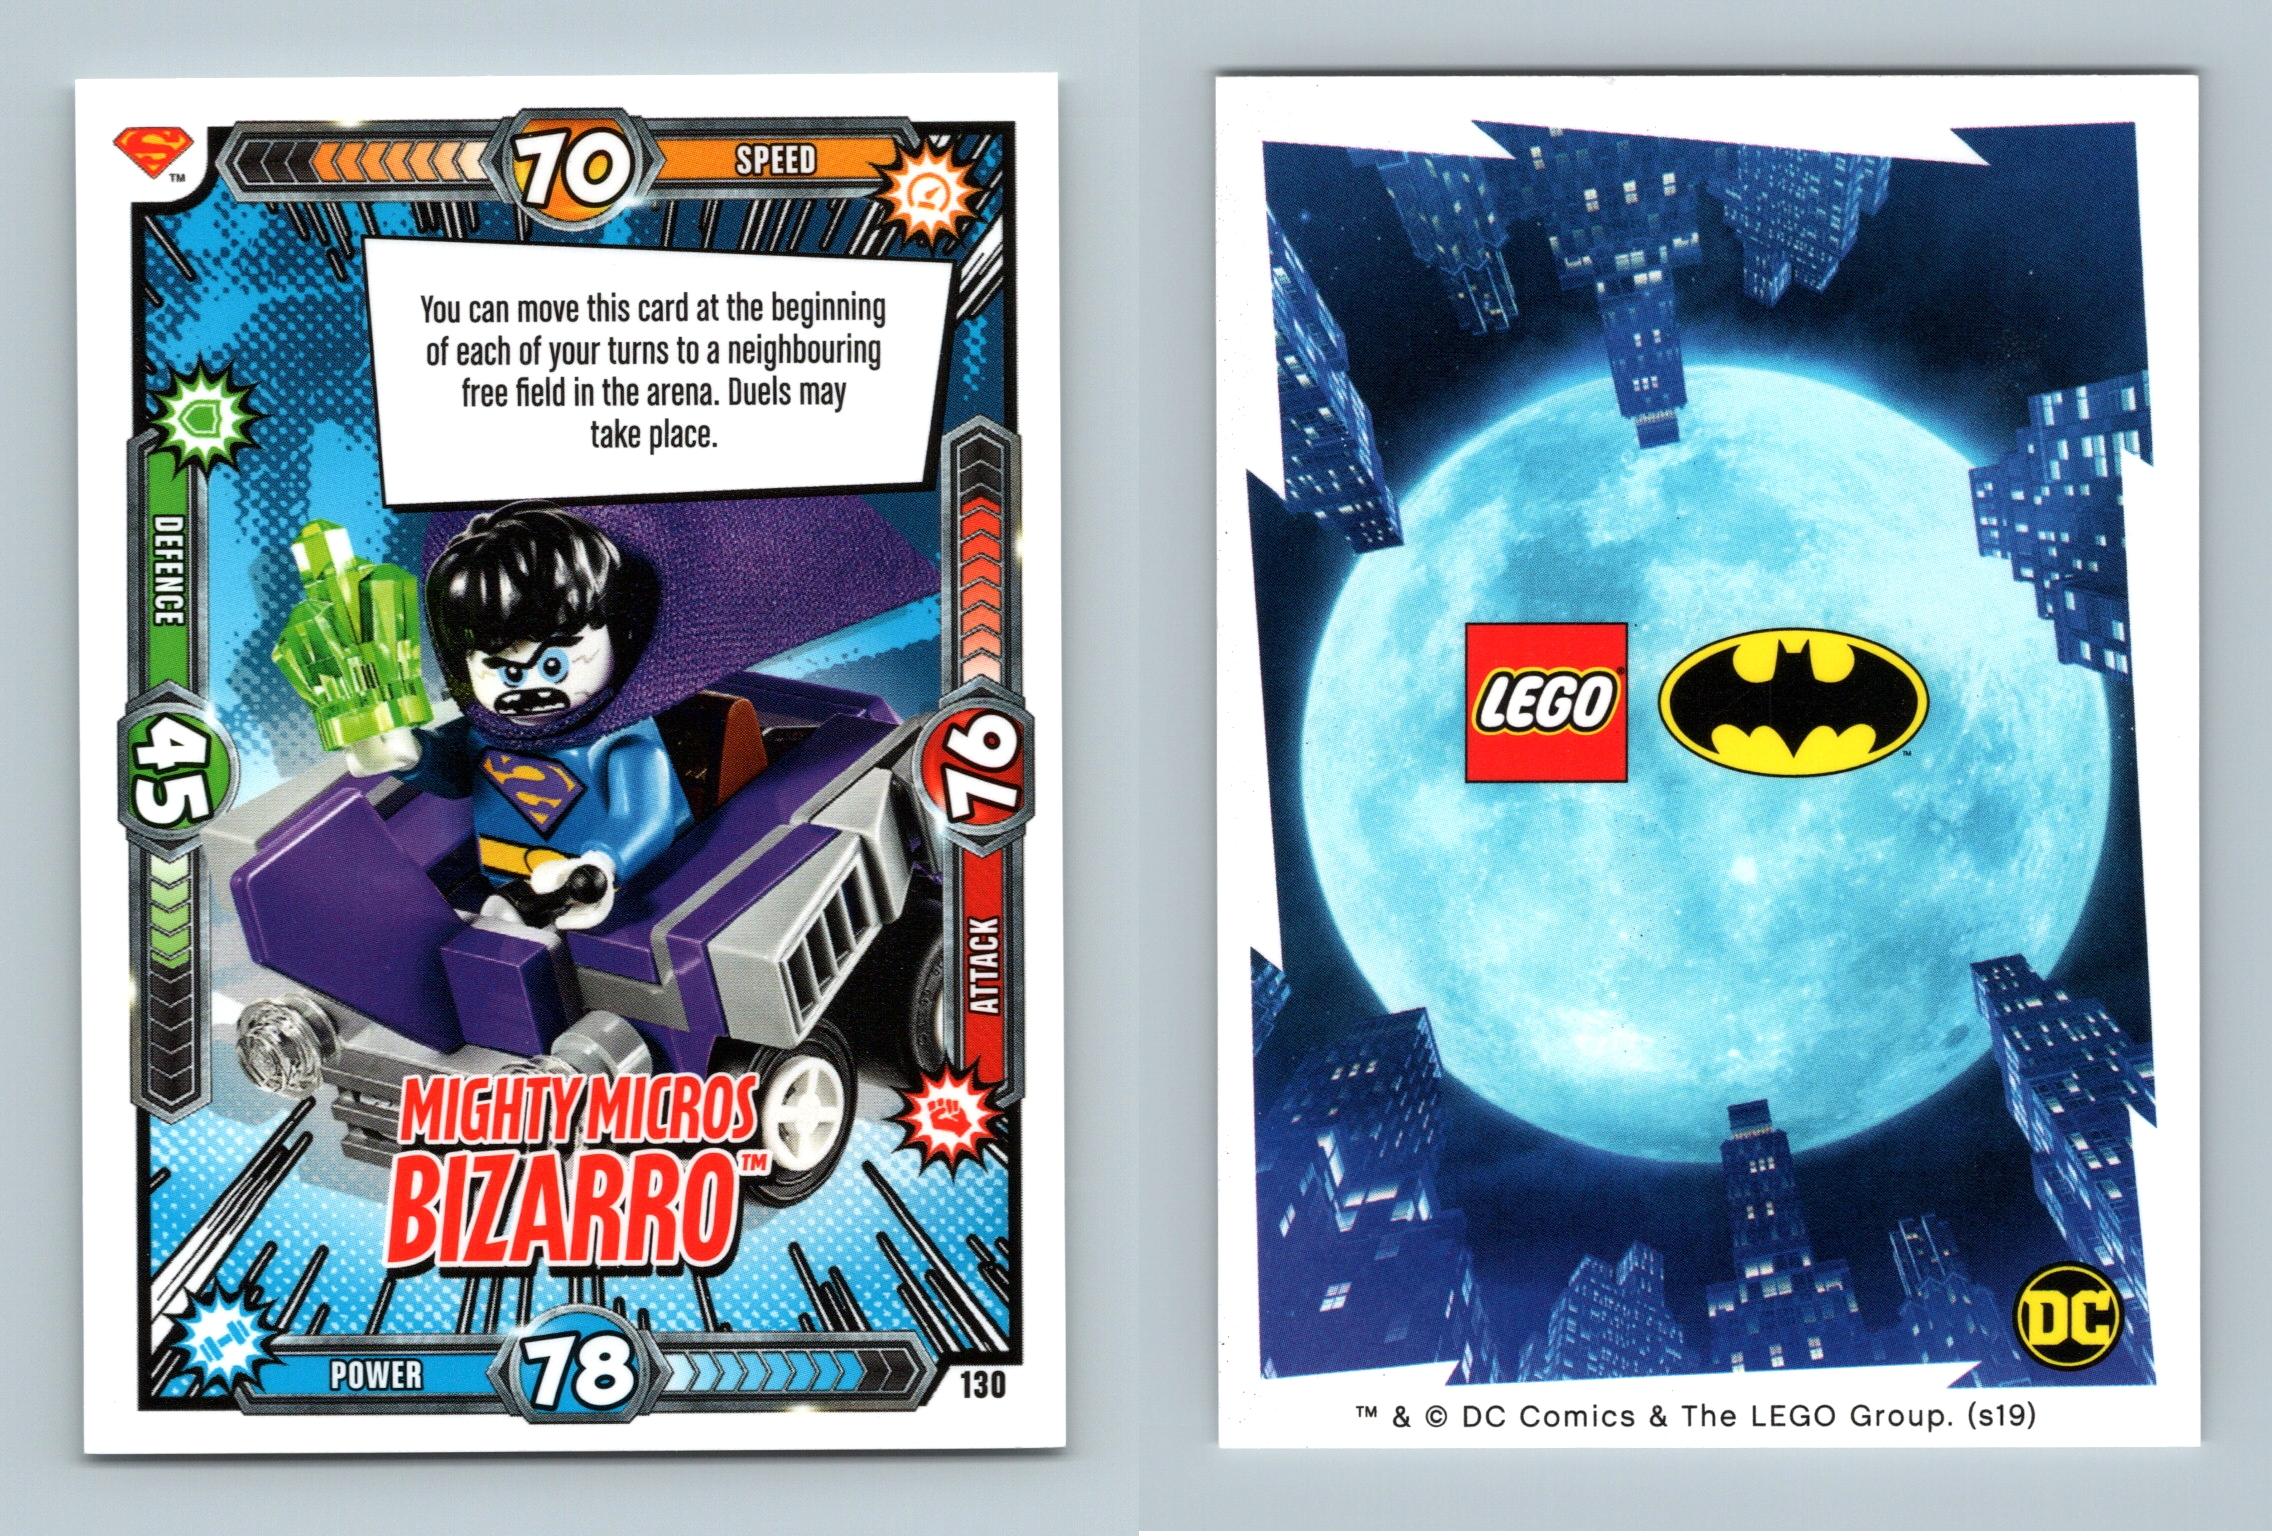 Bizarro #130 Lego Batman Series 1 Mighty Micros TCG Card